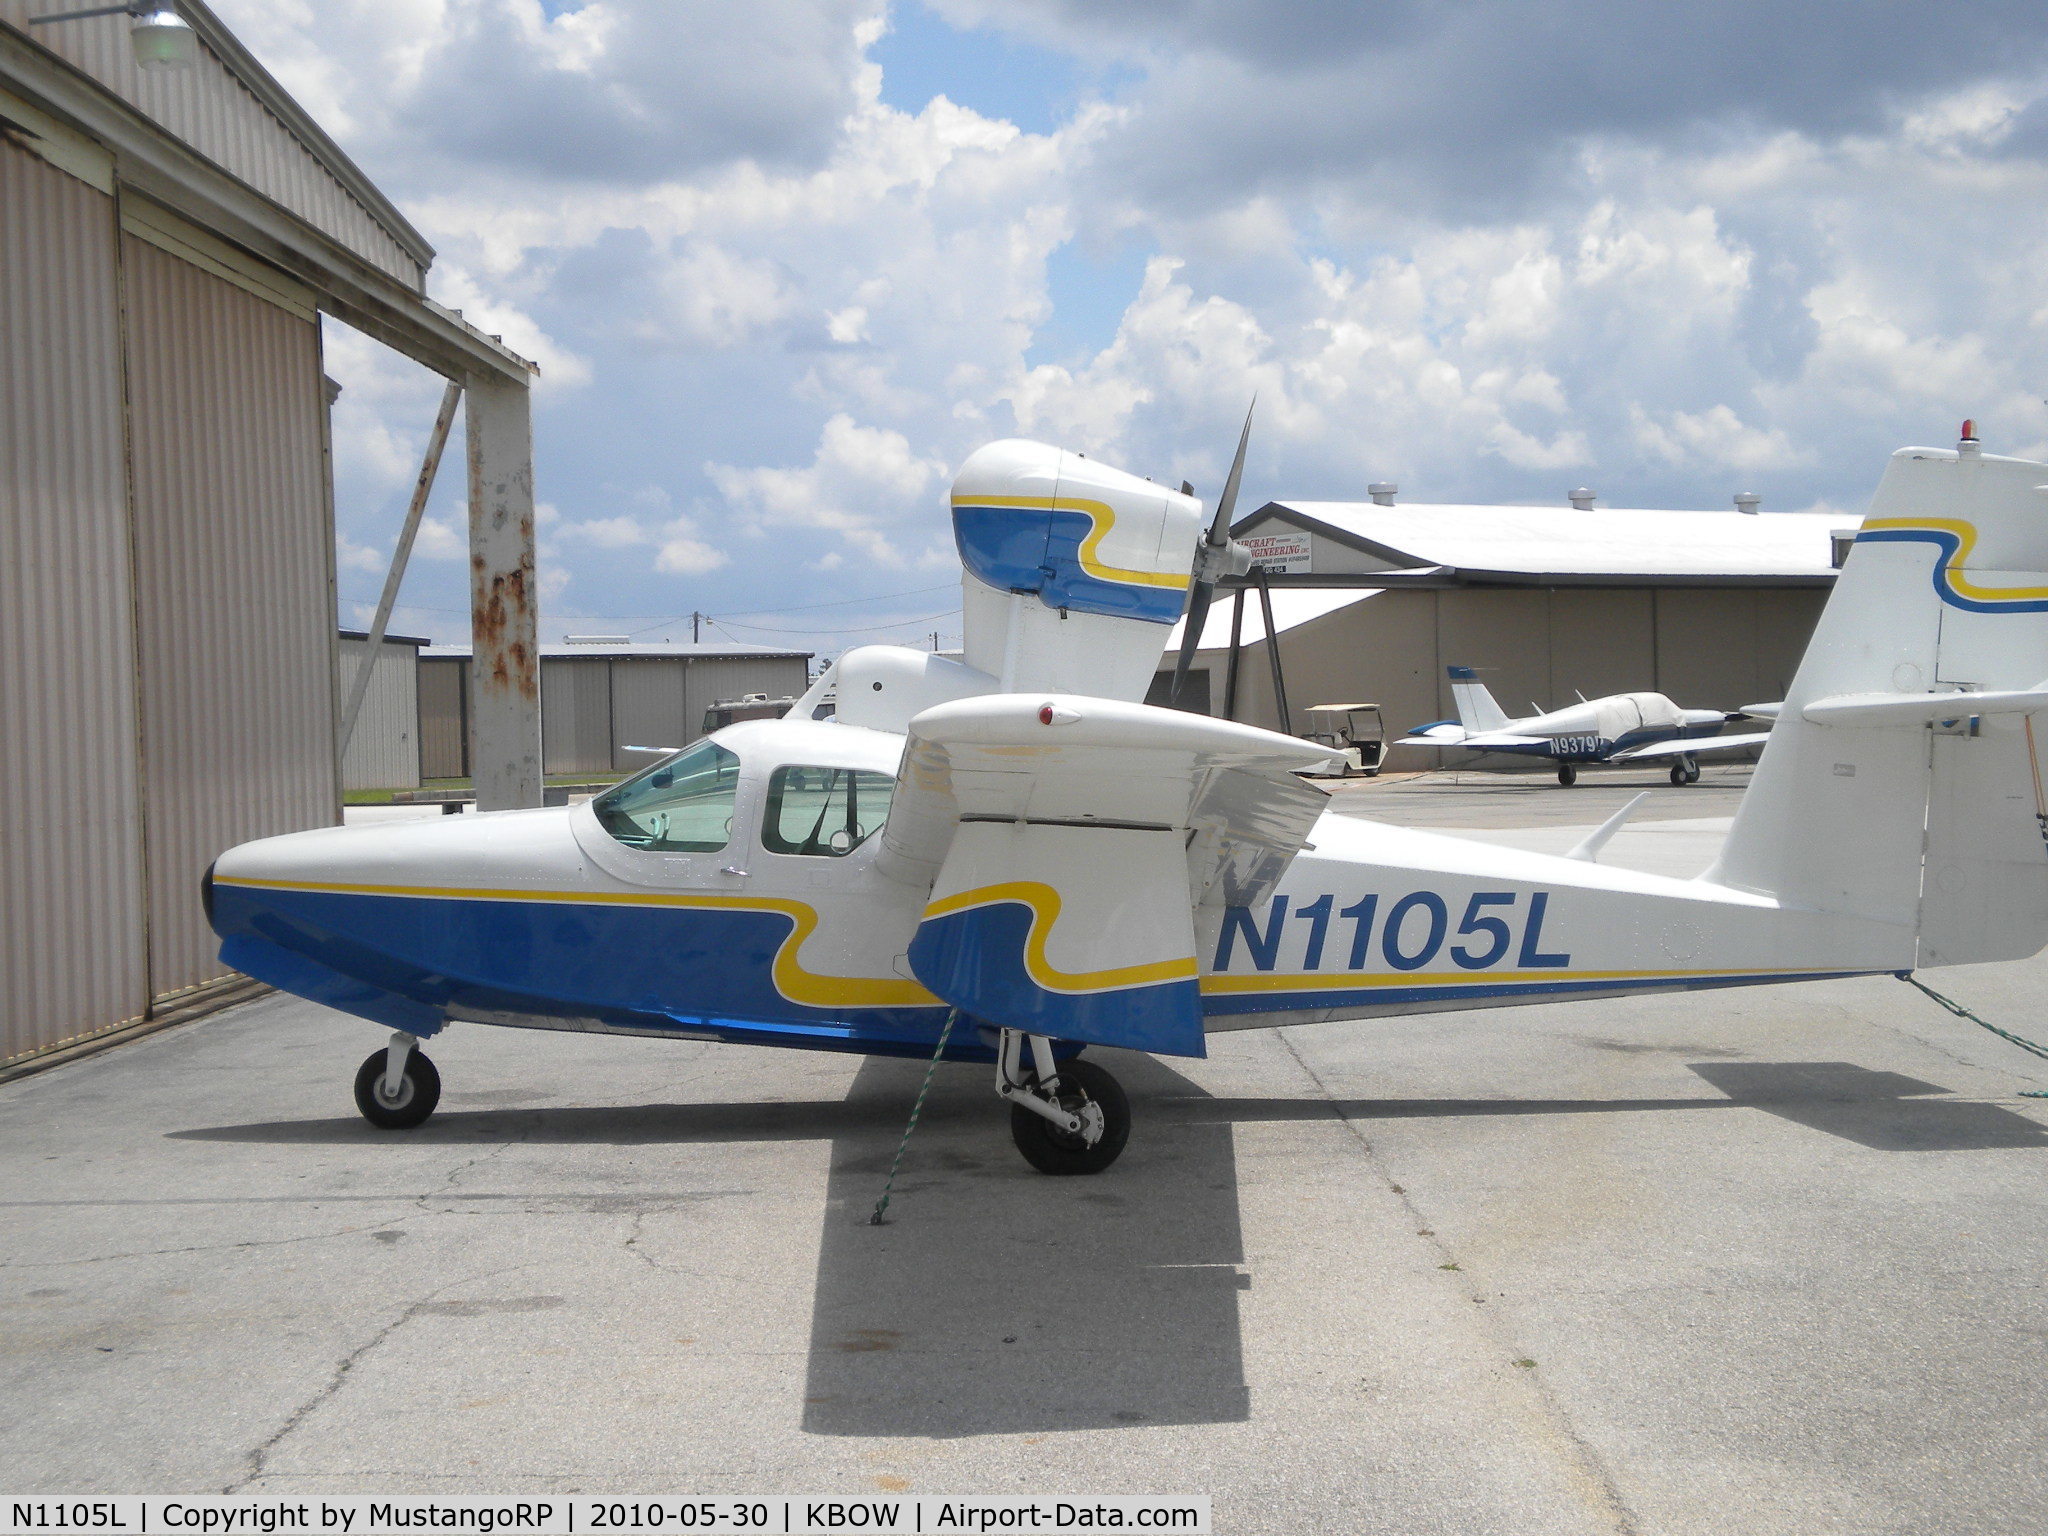 N1105L, 1975 Consolidated Aeronautics Inc. LAKE LA-4 C/N 696, 1975 Consolidated Aeronautics Inc. LAKE LA-4 s/n 696